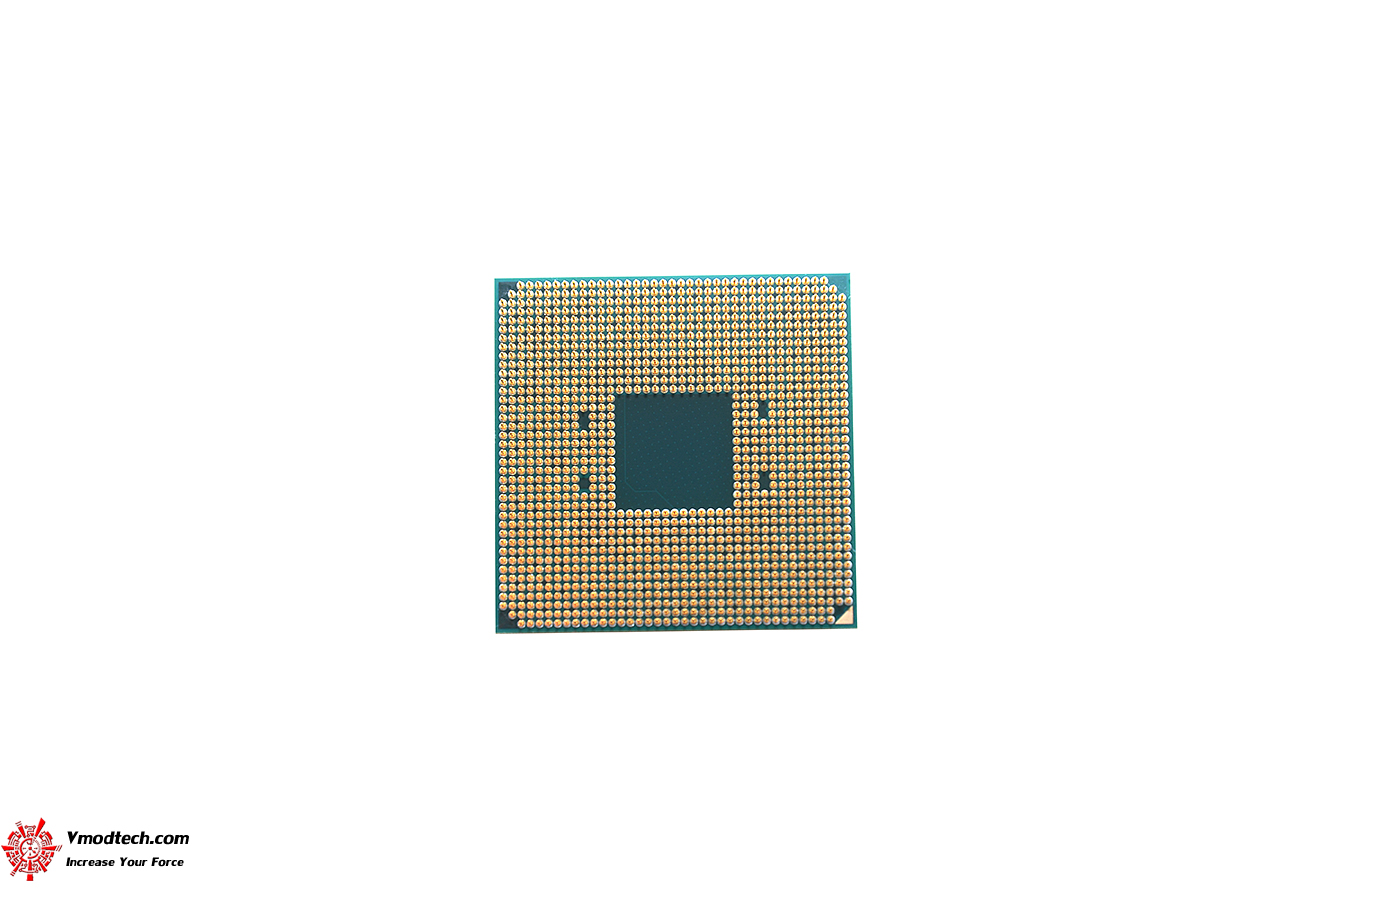 dsc 2356 AMD RYZEN 7 2700 and StoreMI Technology Review